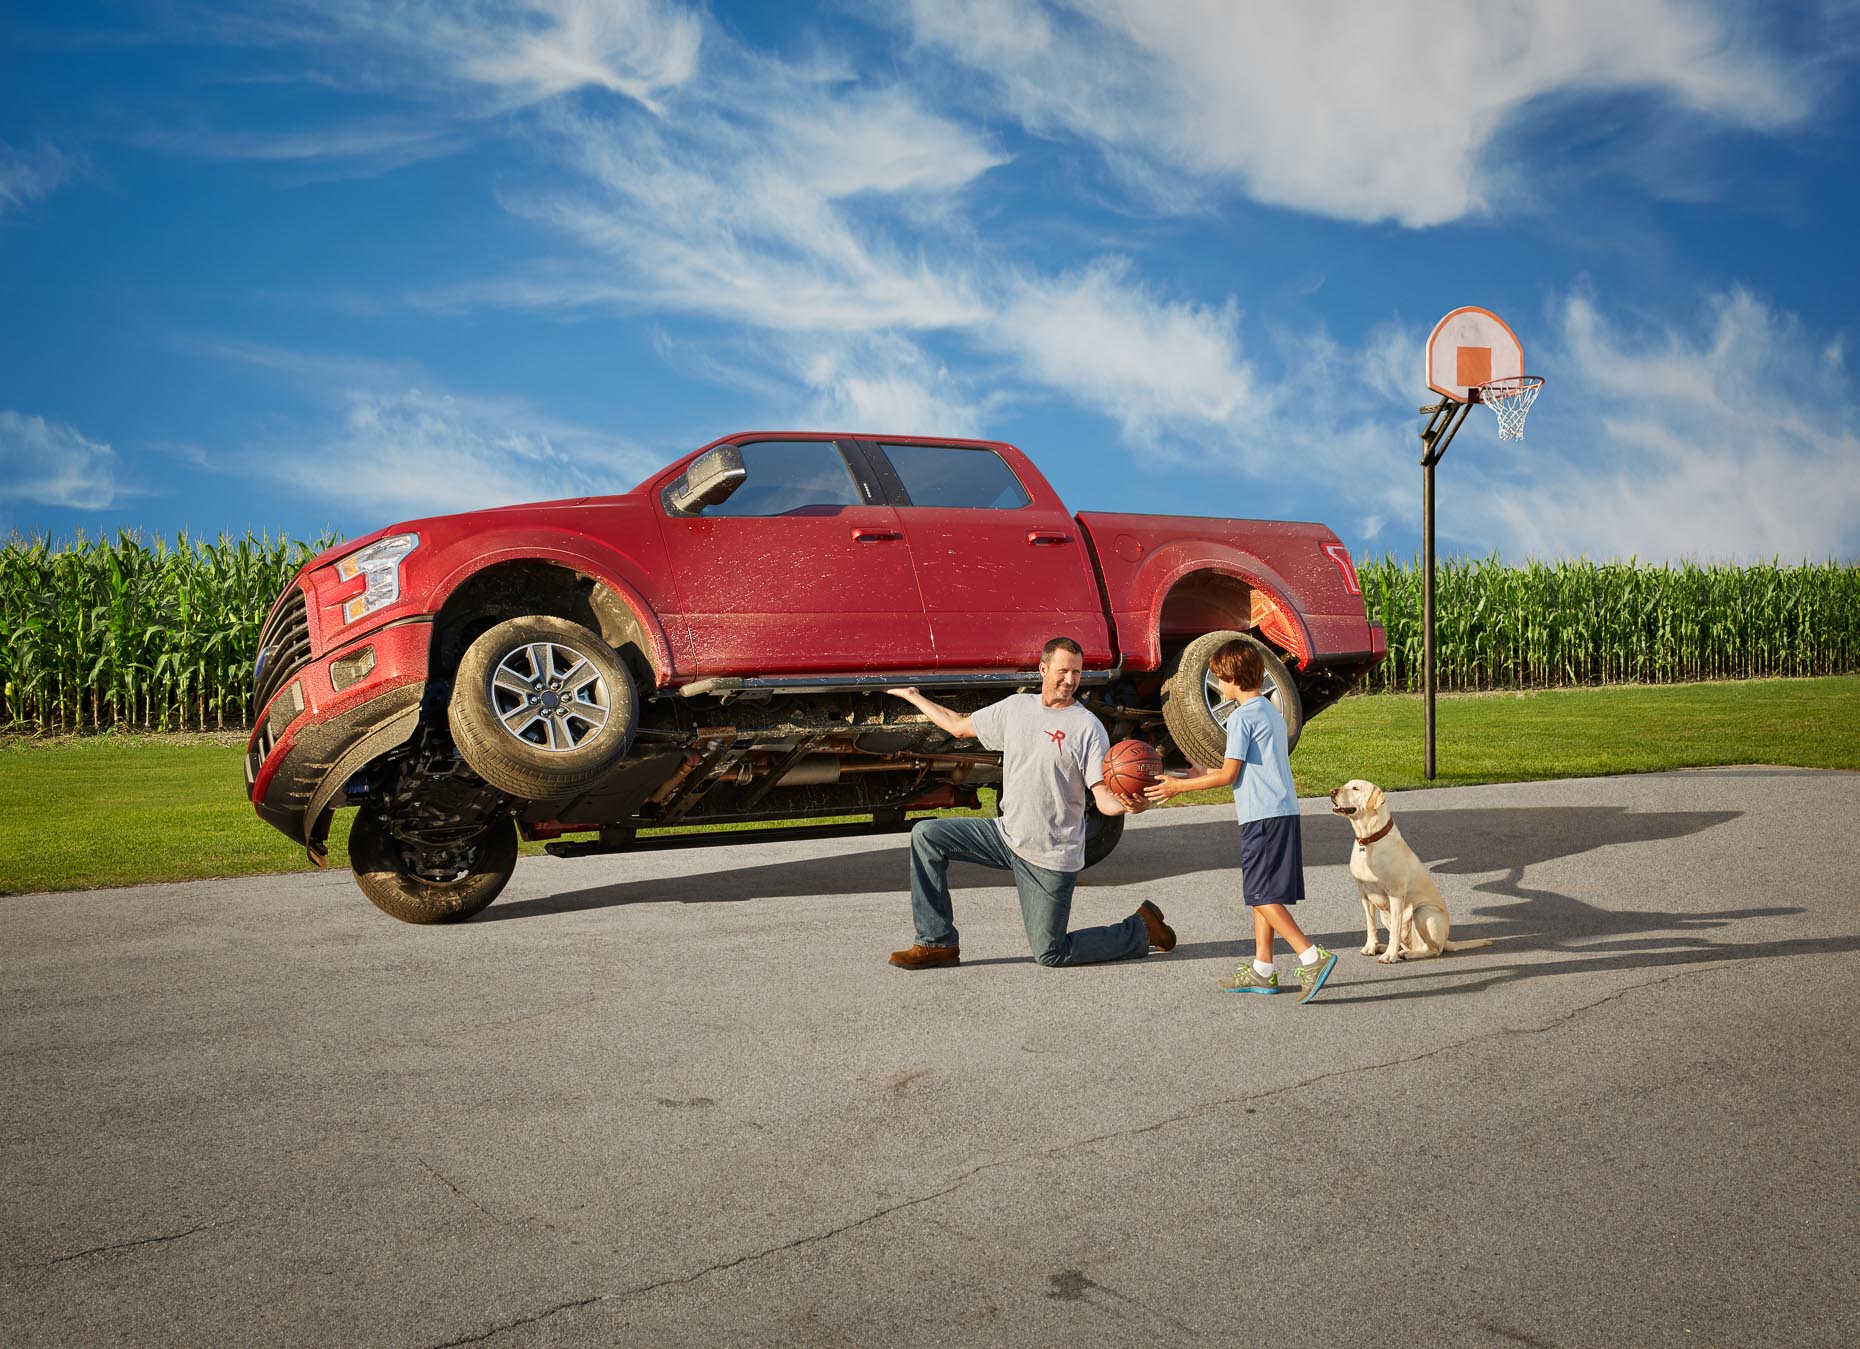 Man lifts up pickup truck to retrieve basketball for boy with dog. David Zaitz.